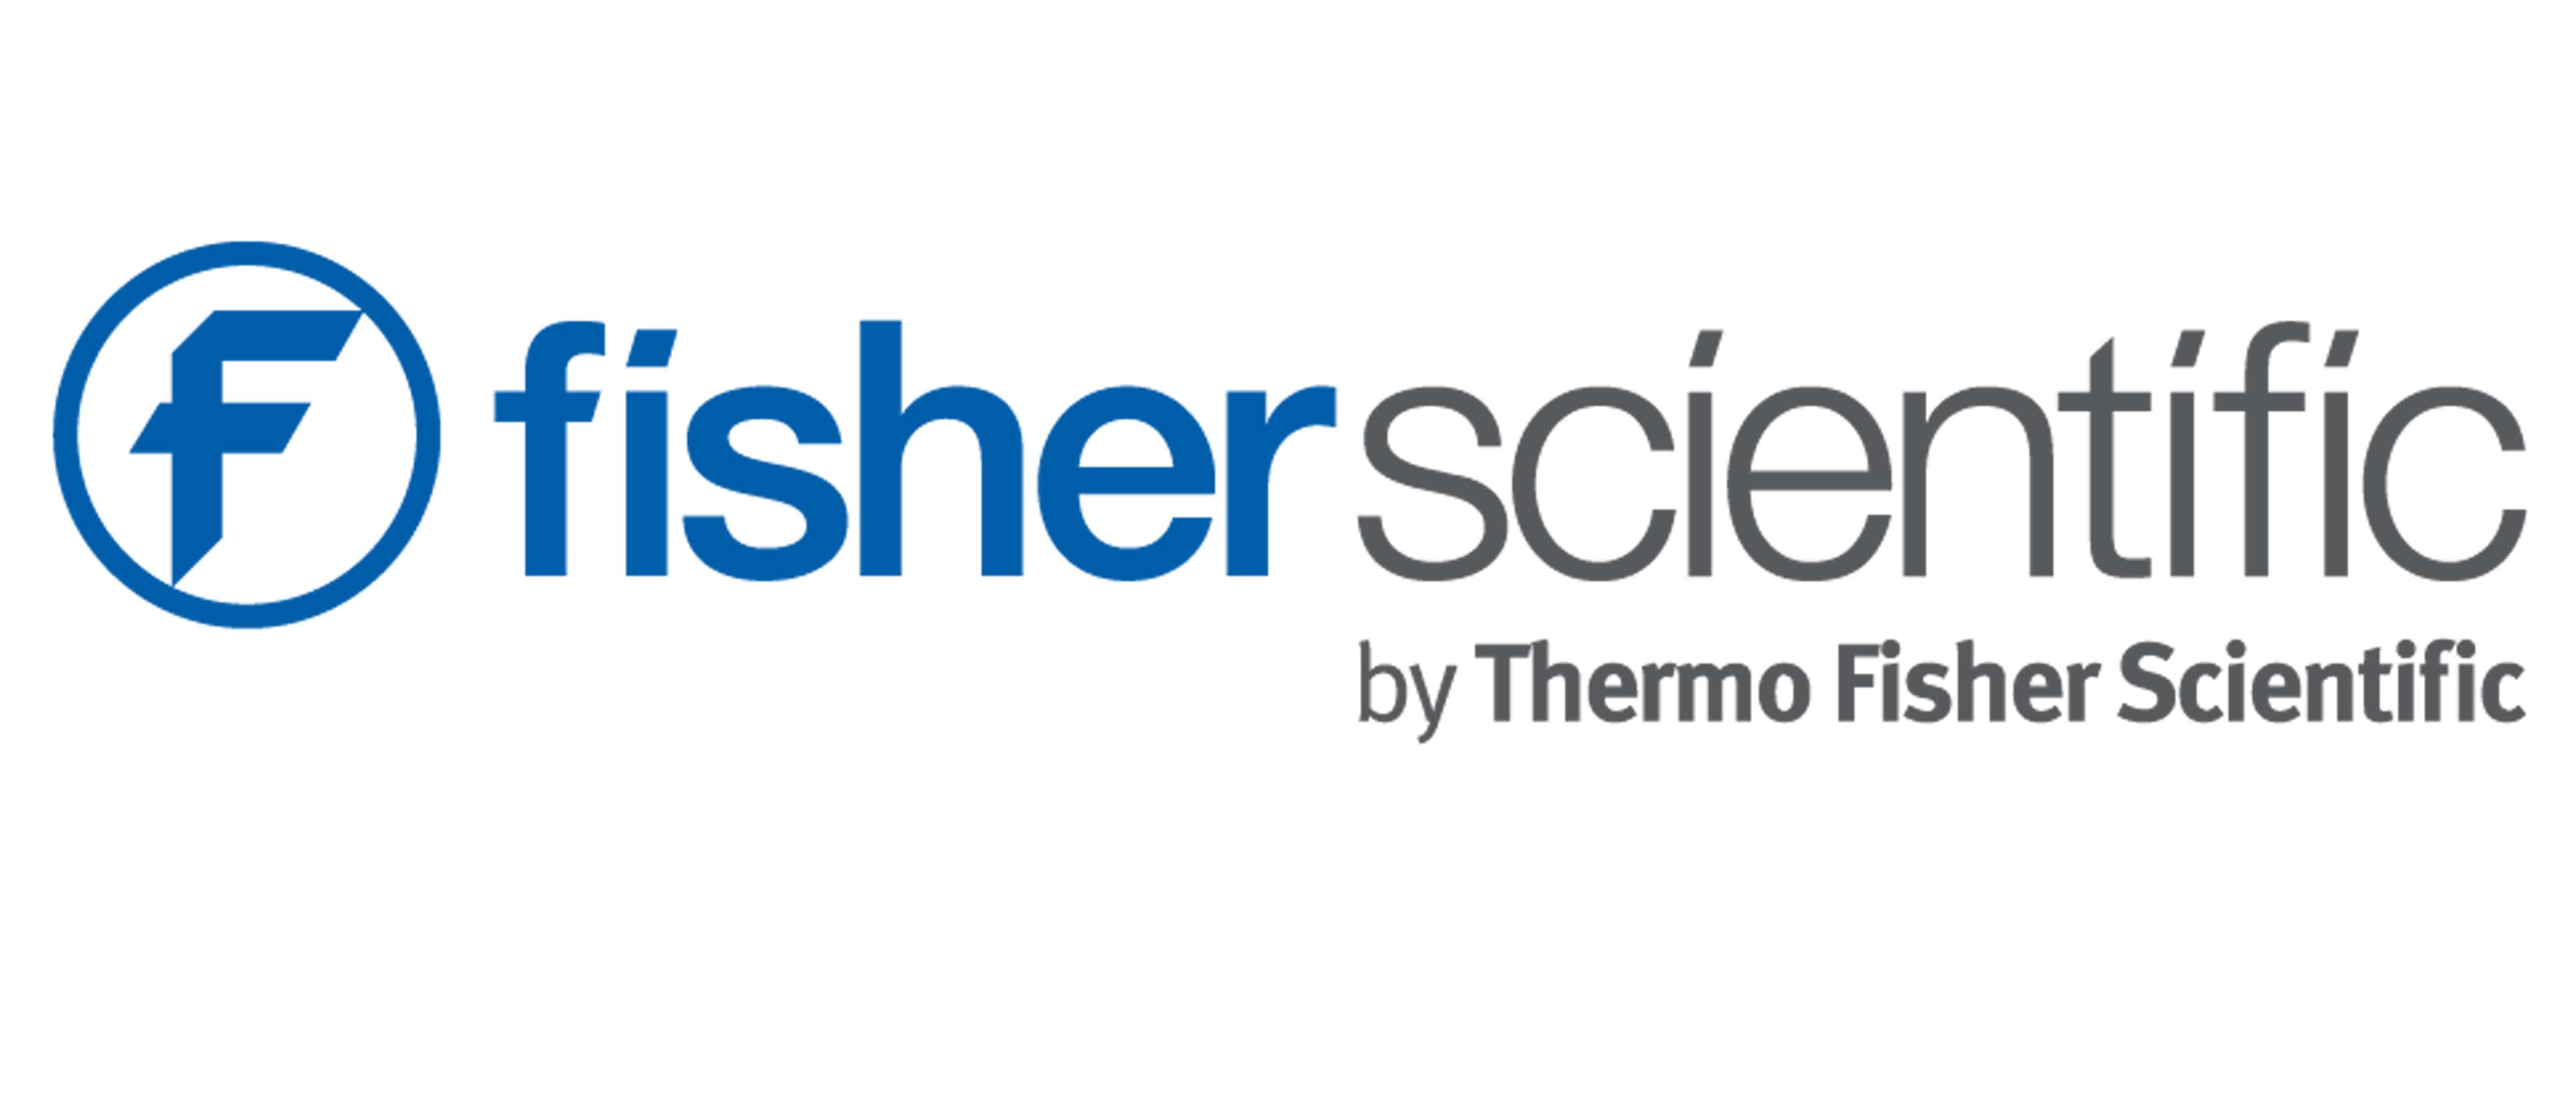 2017-07/fisher-scientific-logo.jpg